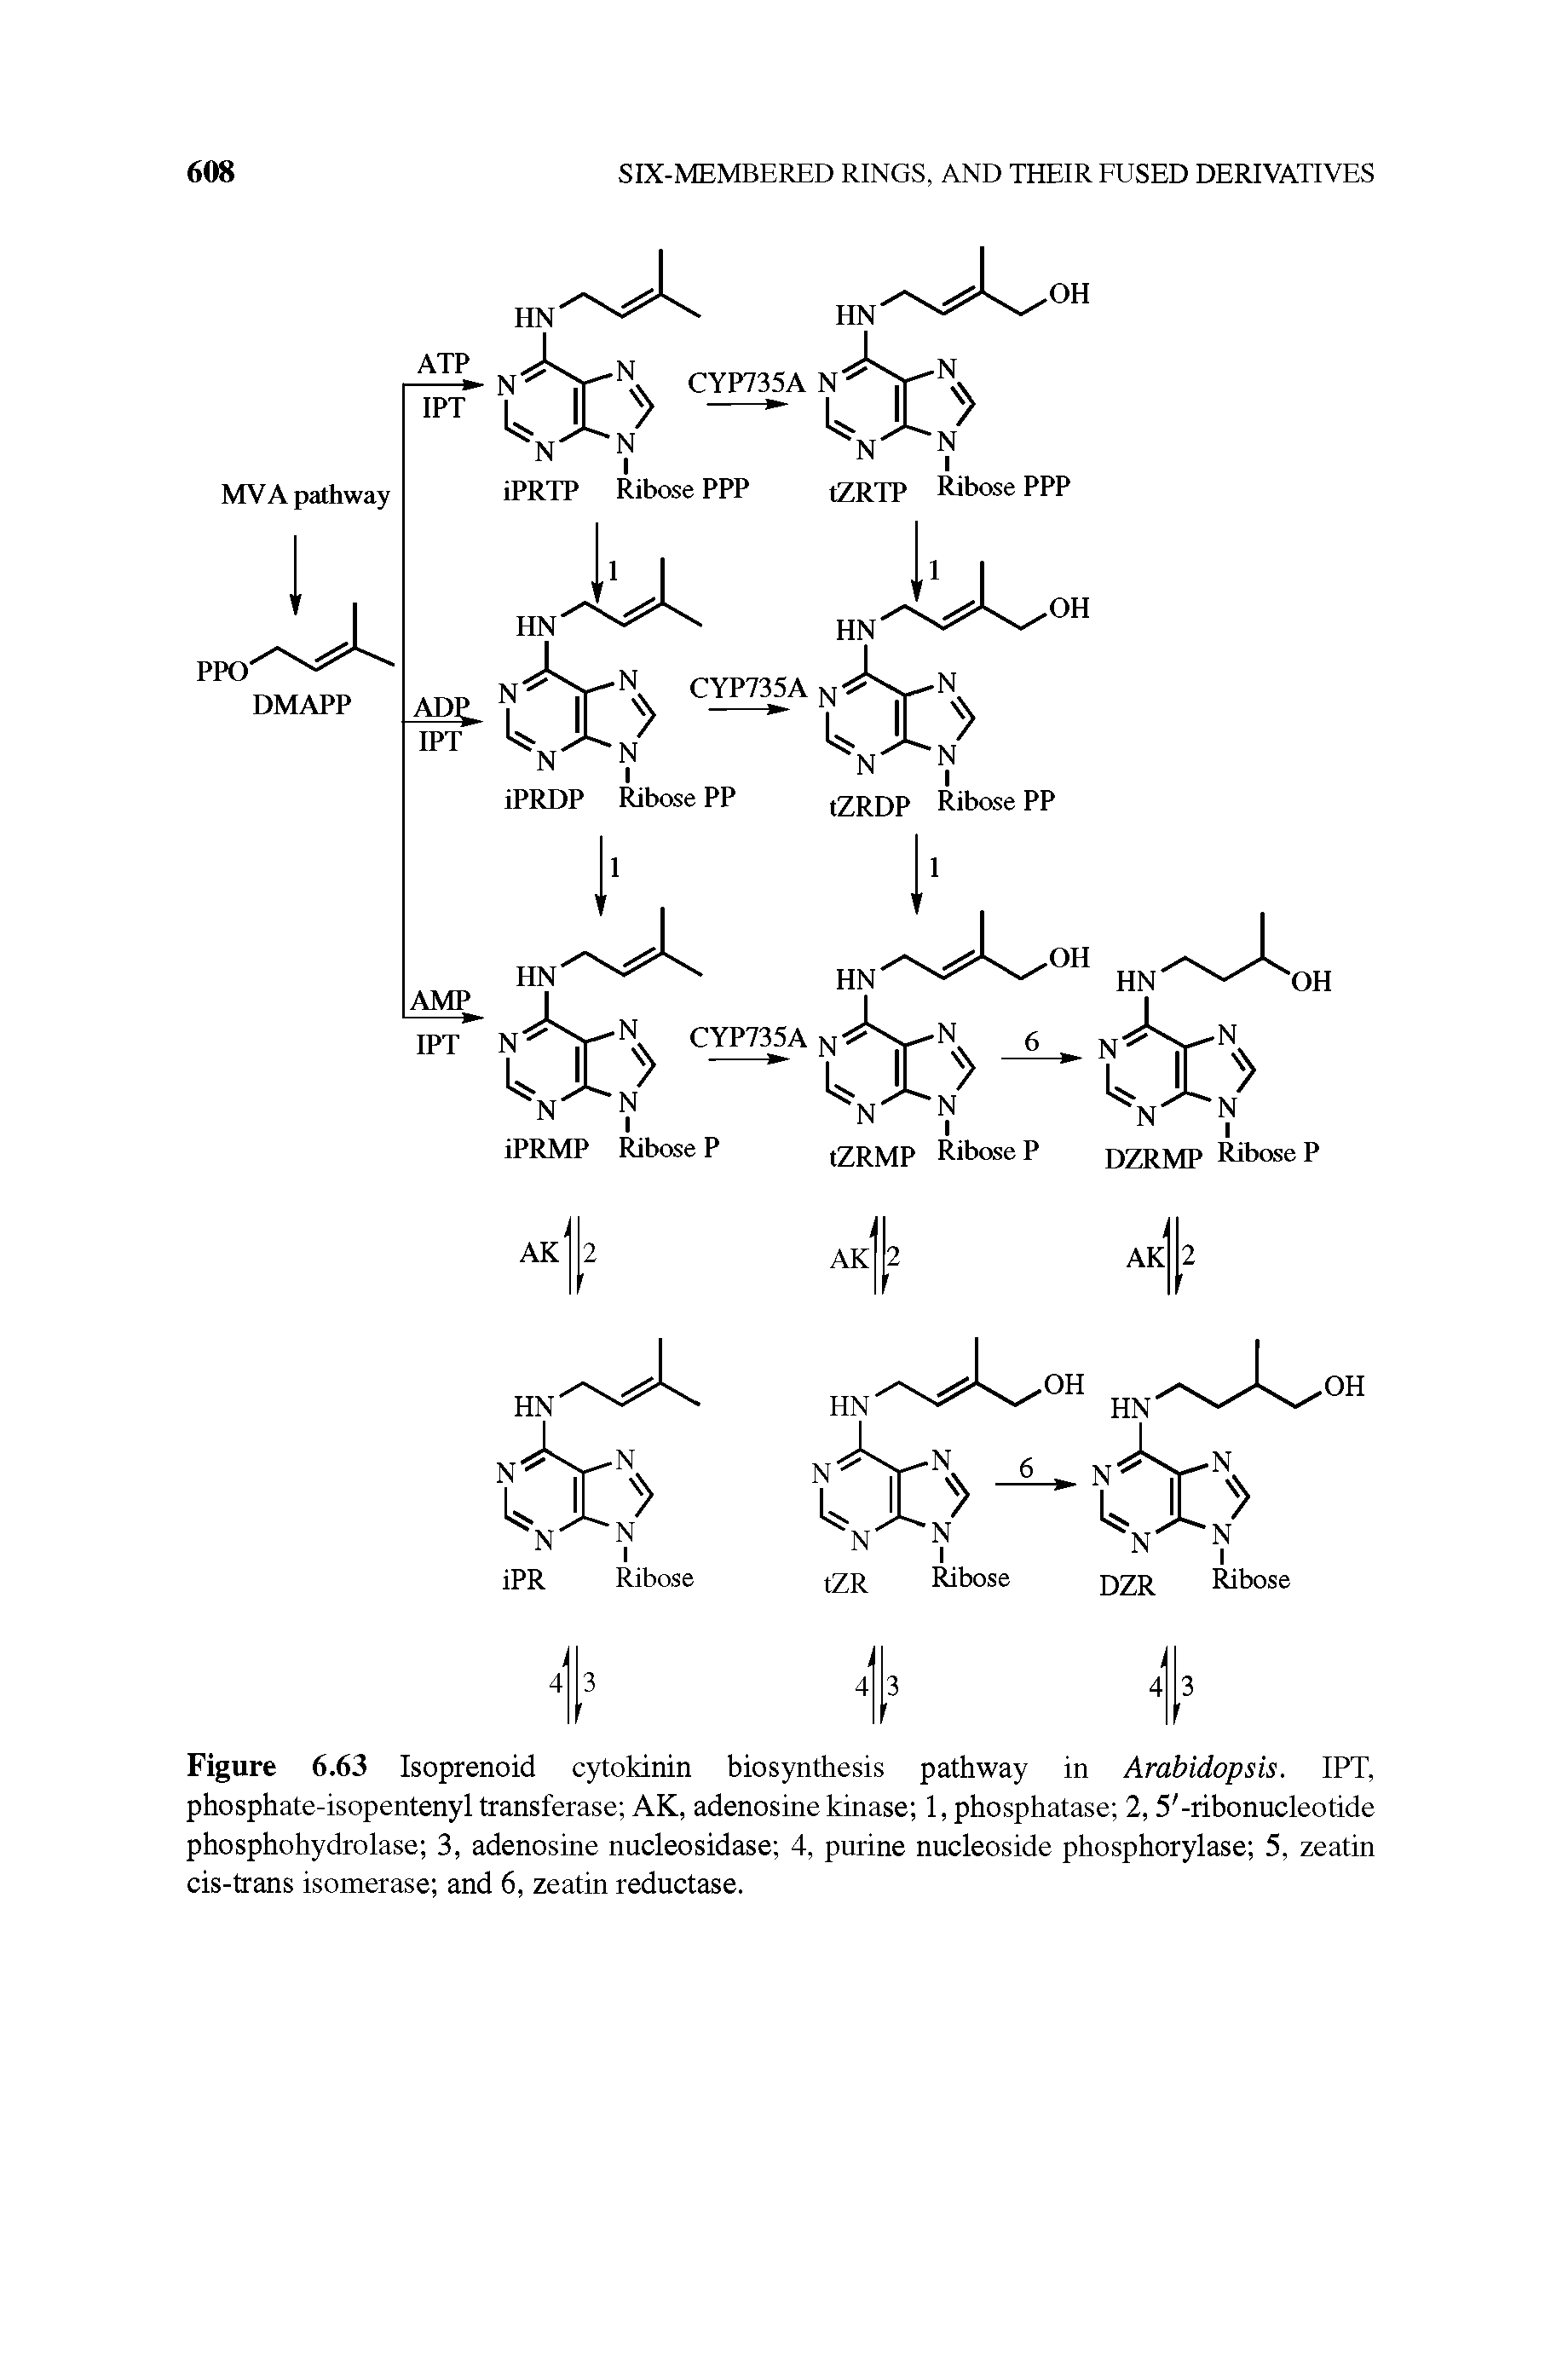 Figure 6.63 Isoprenoid cytokinin biosynthesis pathway in Arabidopsis. IPT, phosphate-isopentenyl transferase AK, adenosine kinase 1, phosphatase 2,5 -ribonucleotide phosphohydrolase 3, adenosine nucleosidase 4, purine nucleoside phosphorylase 5, zeatin cis-trans isomerase and 6, zeatin reductase.